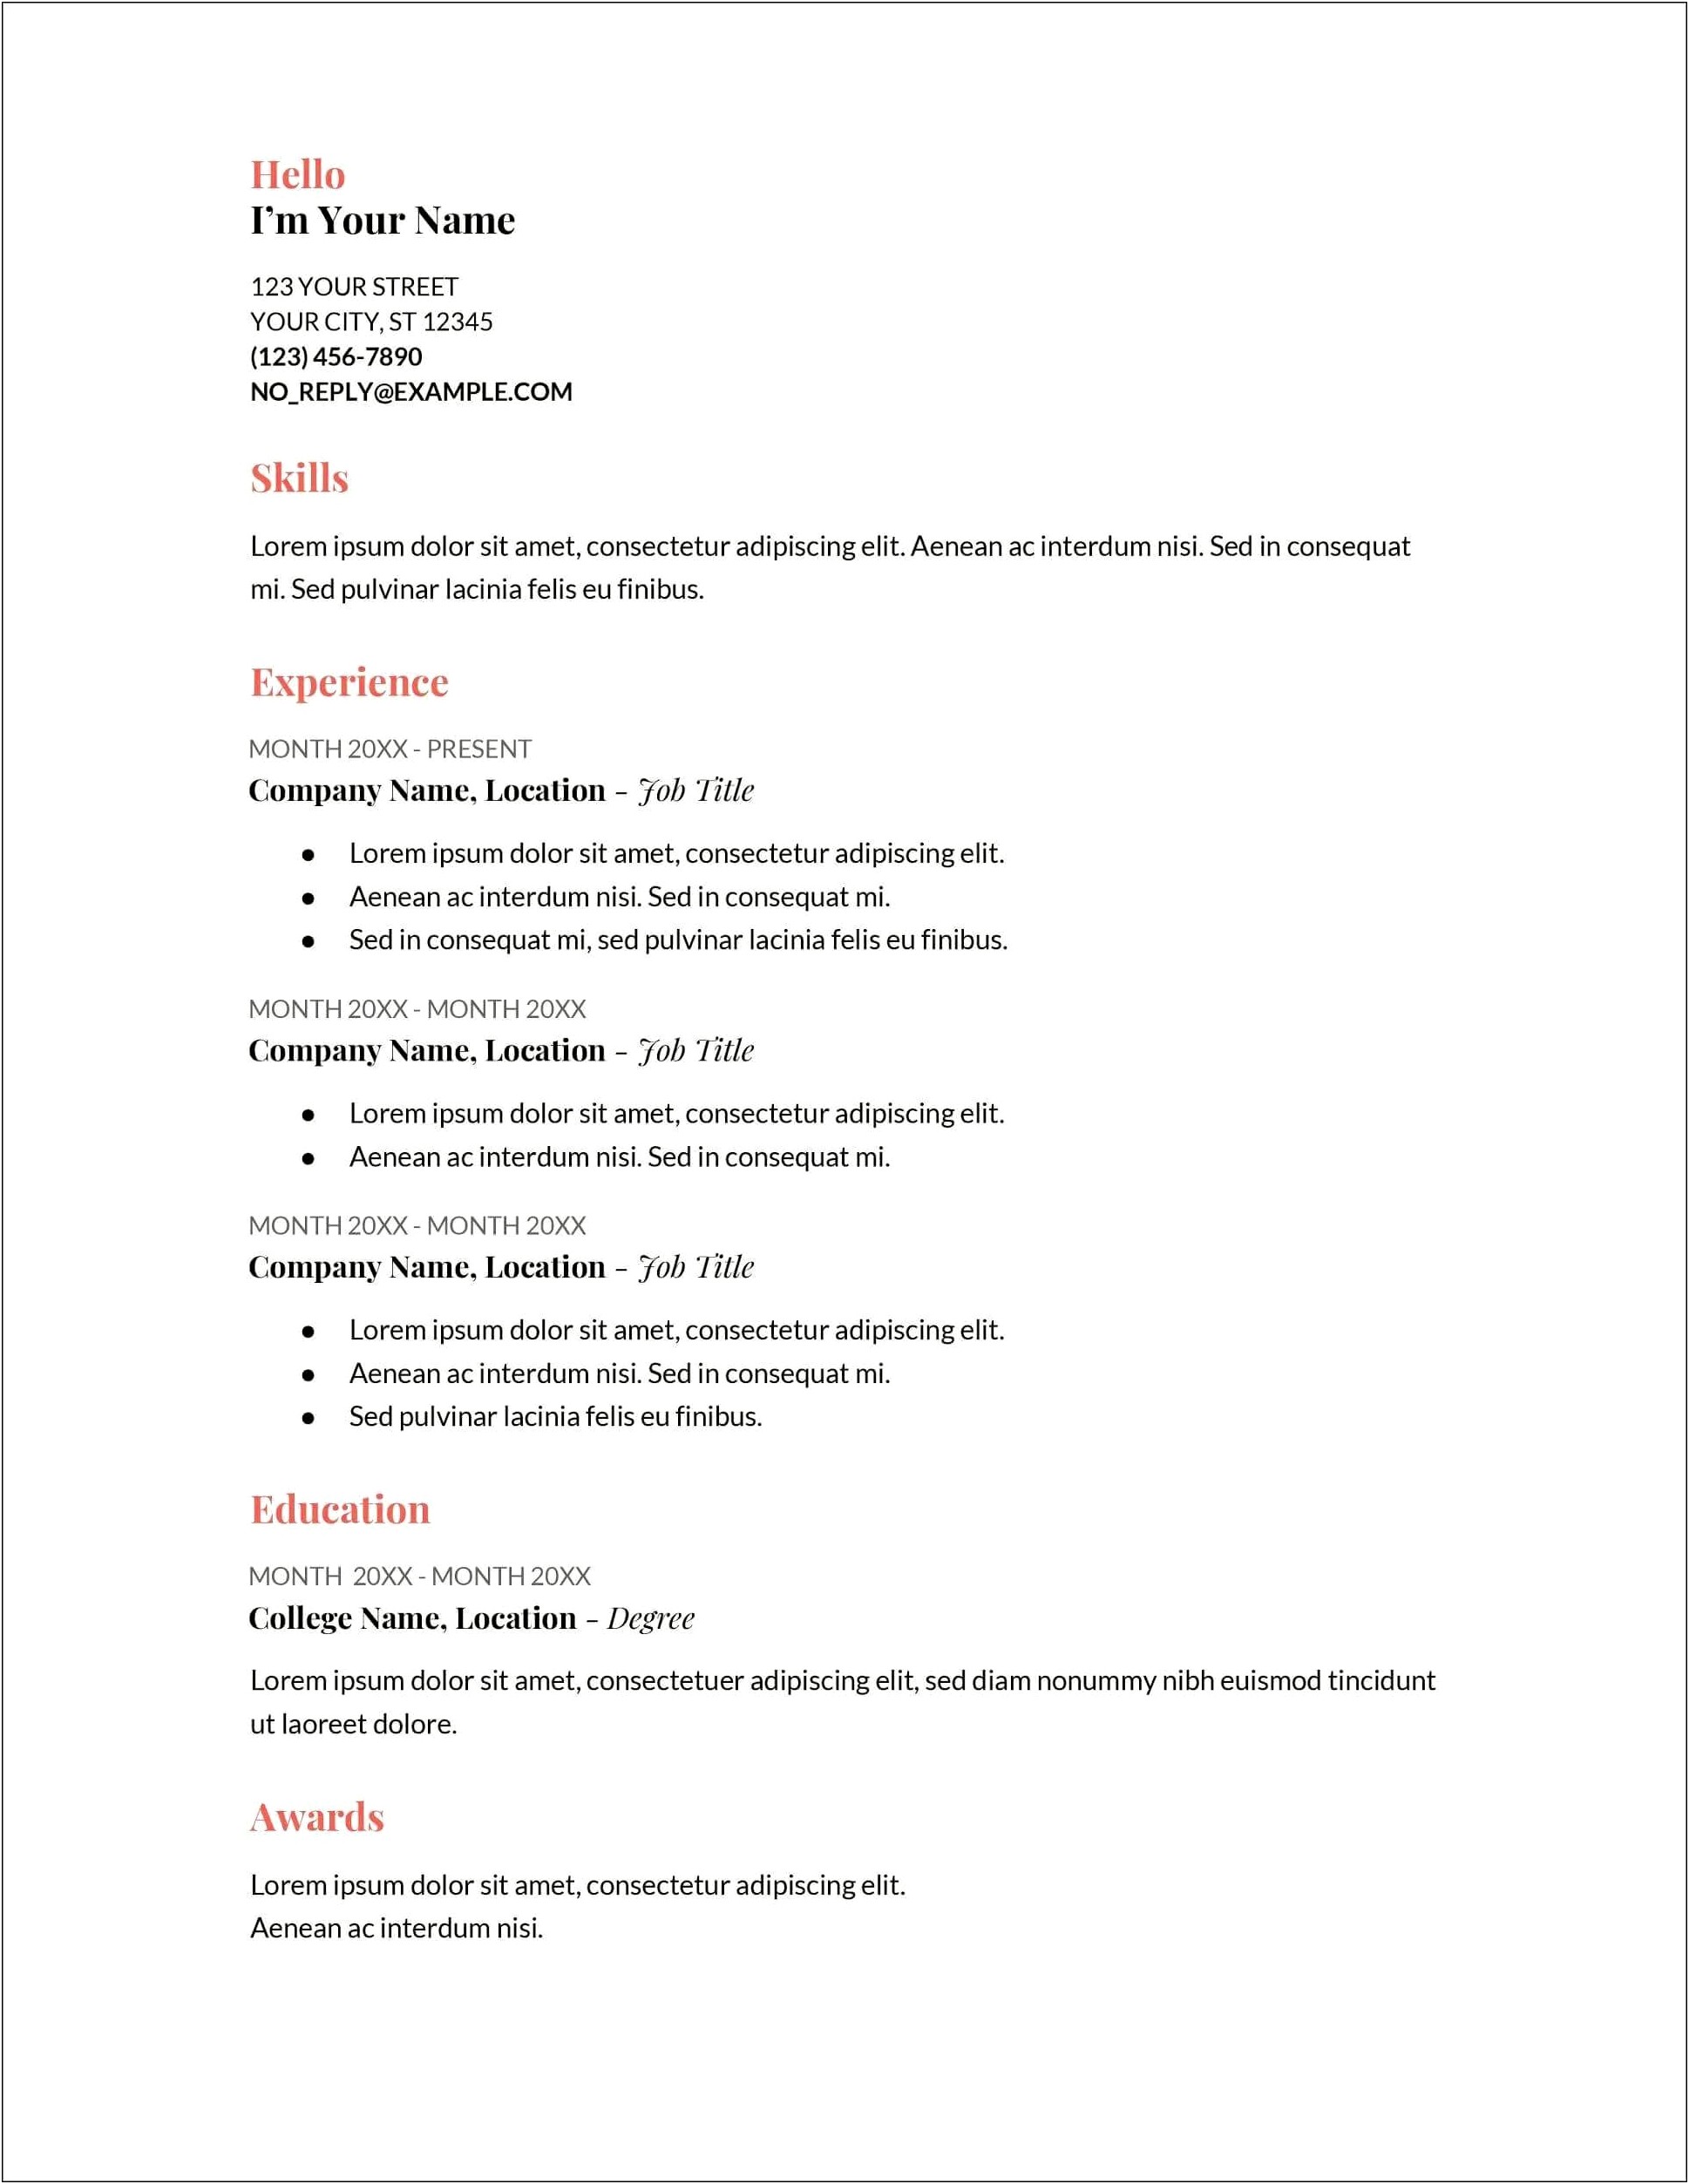 Sample Resume For It Jobs Pdf